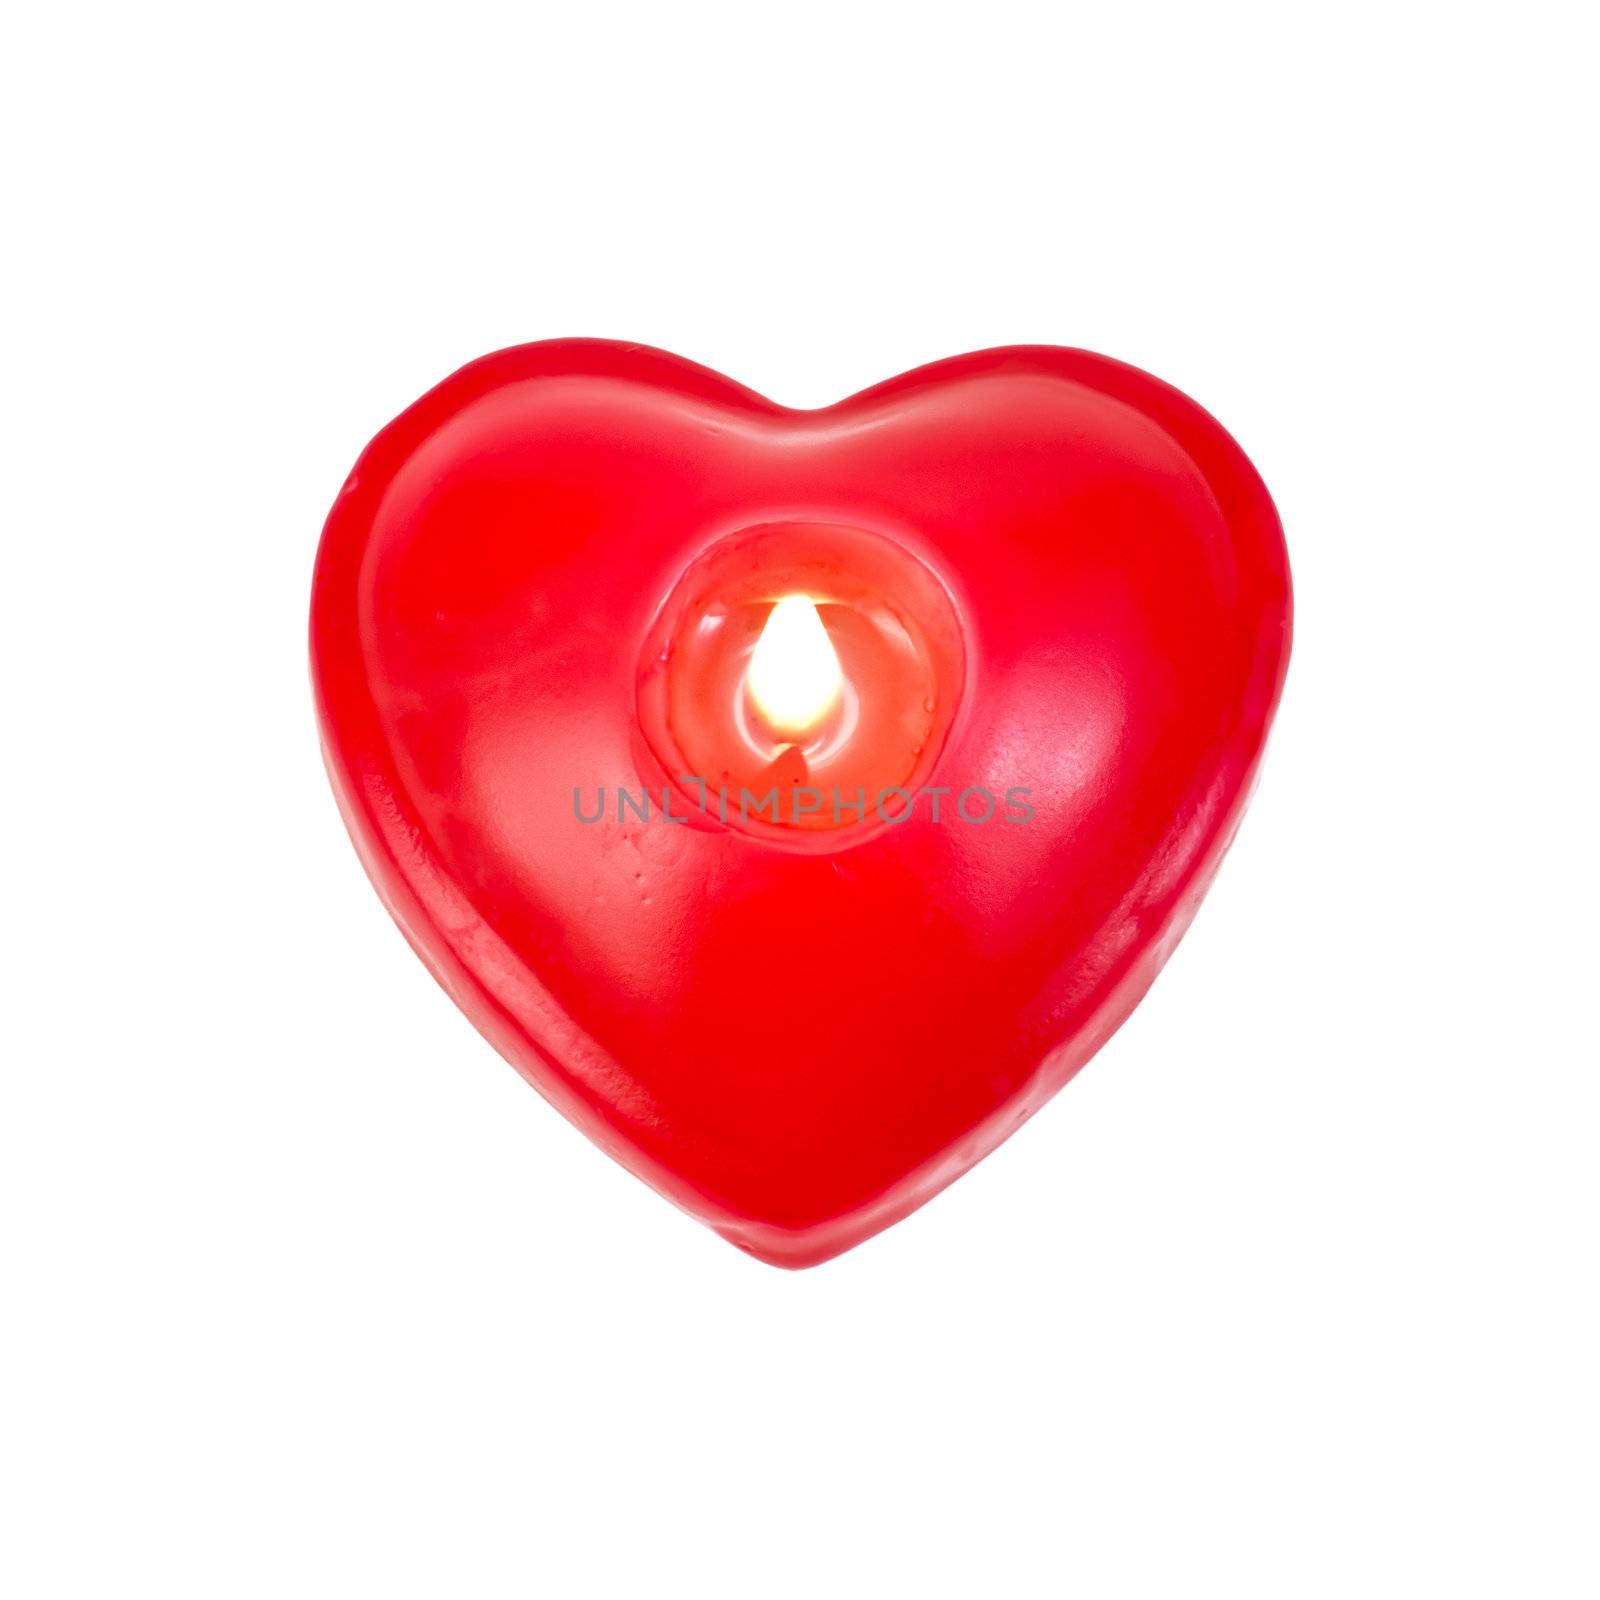 One candle burning in heart shape isolated on white background